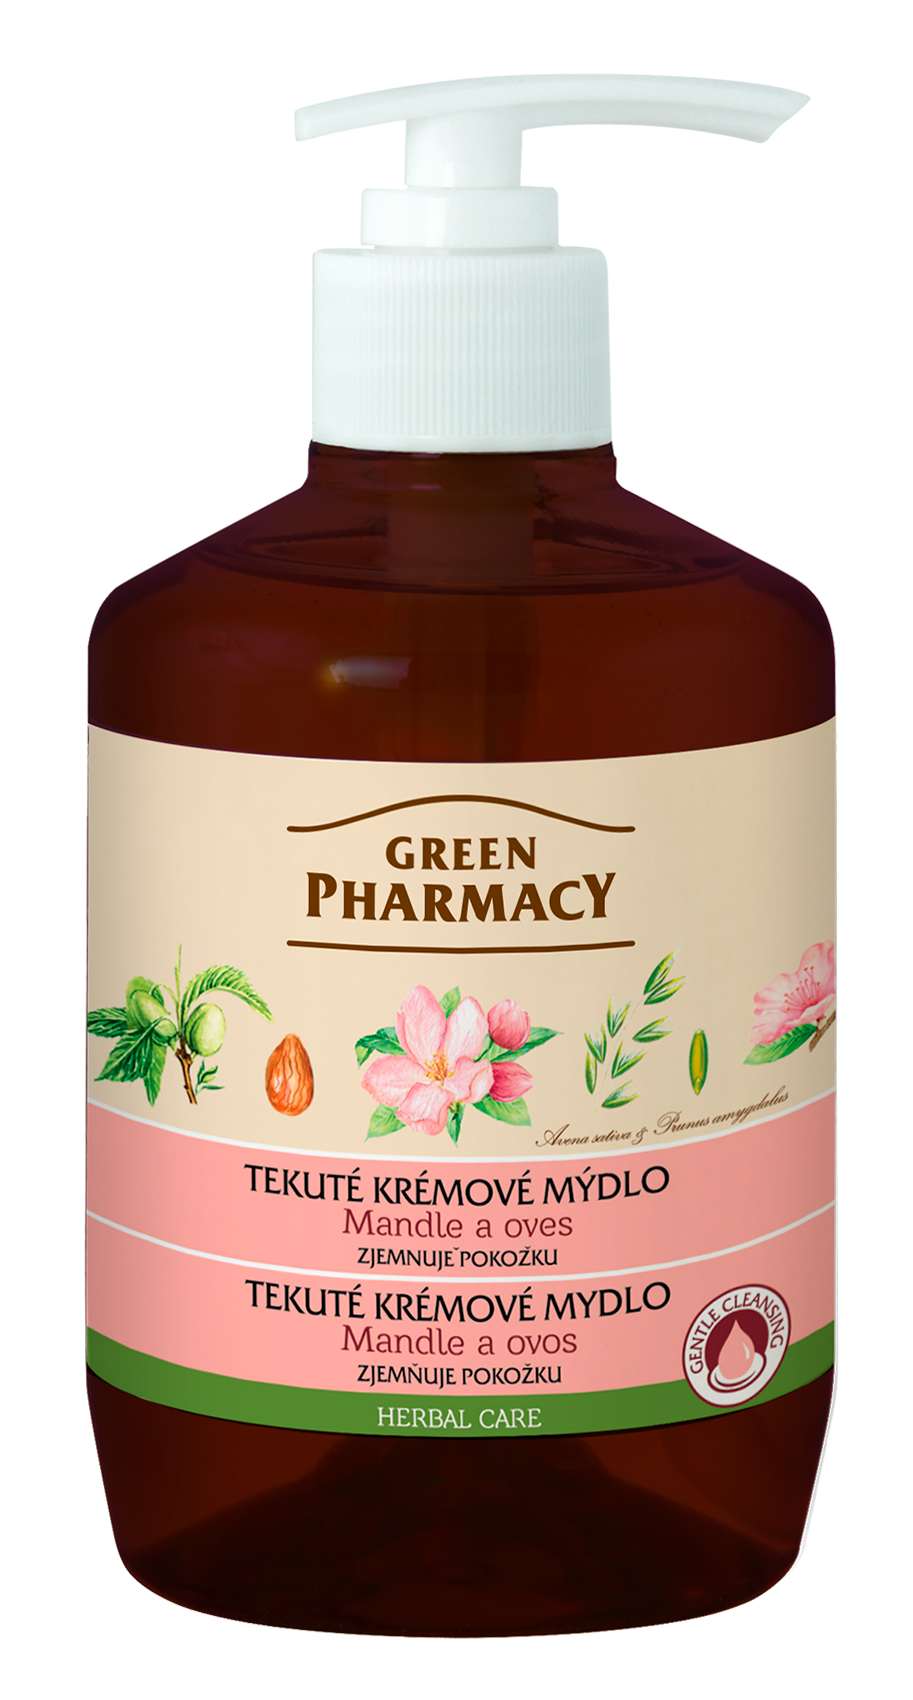 Green Pharmacy Mandle a Ovos - tekuté krémové mydlo zjemňujúce pokožku, 460 ml